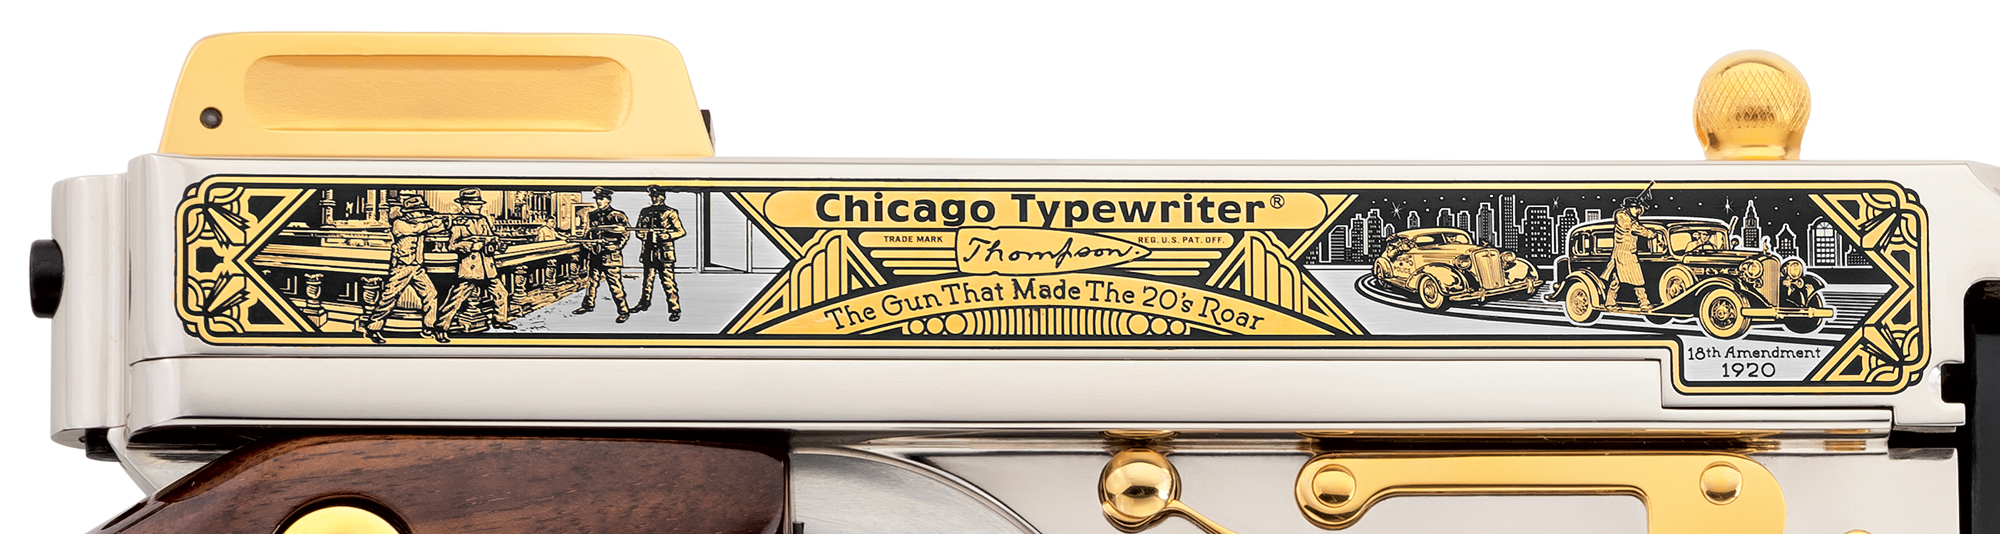 Chicago-Typewriter-Thompson-Right-CU